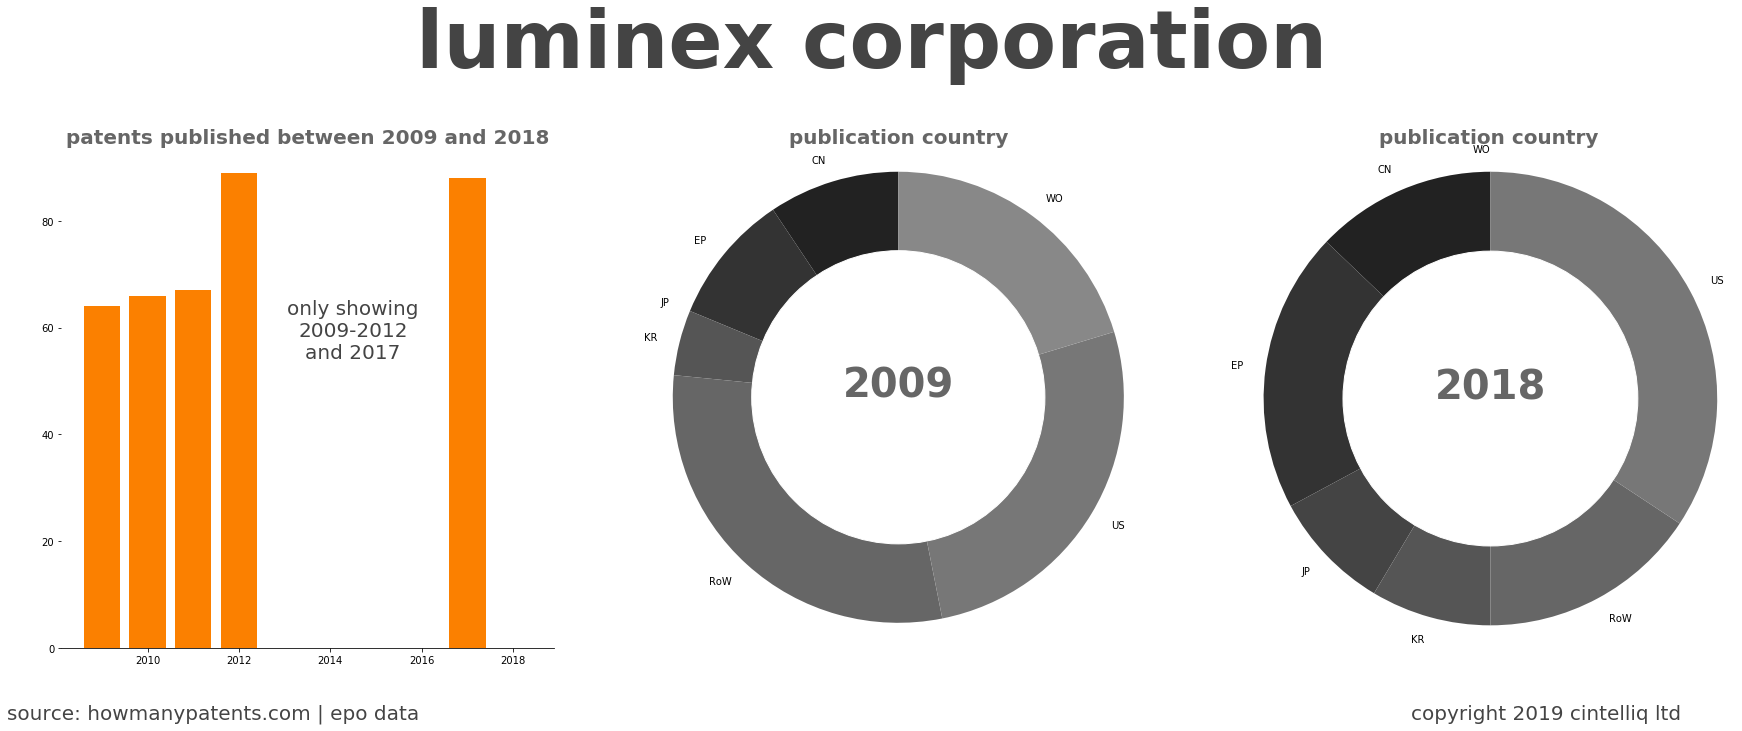 summary of patents for Luminex Corporation